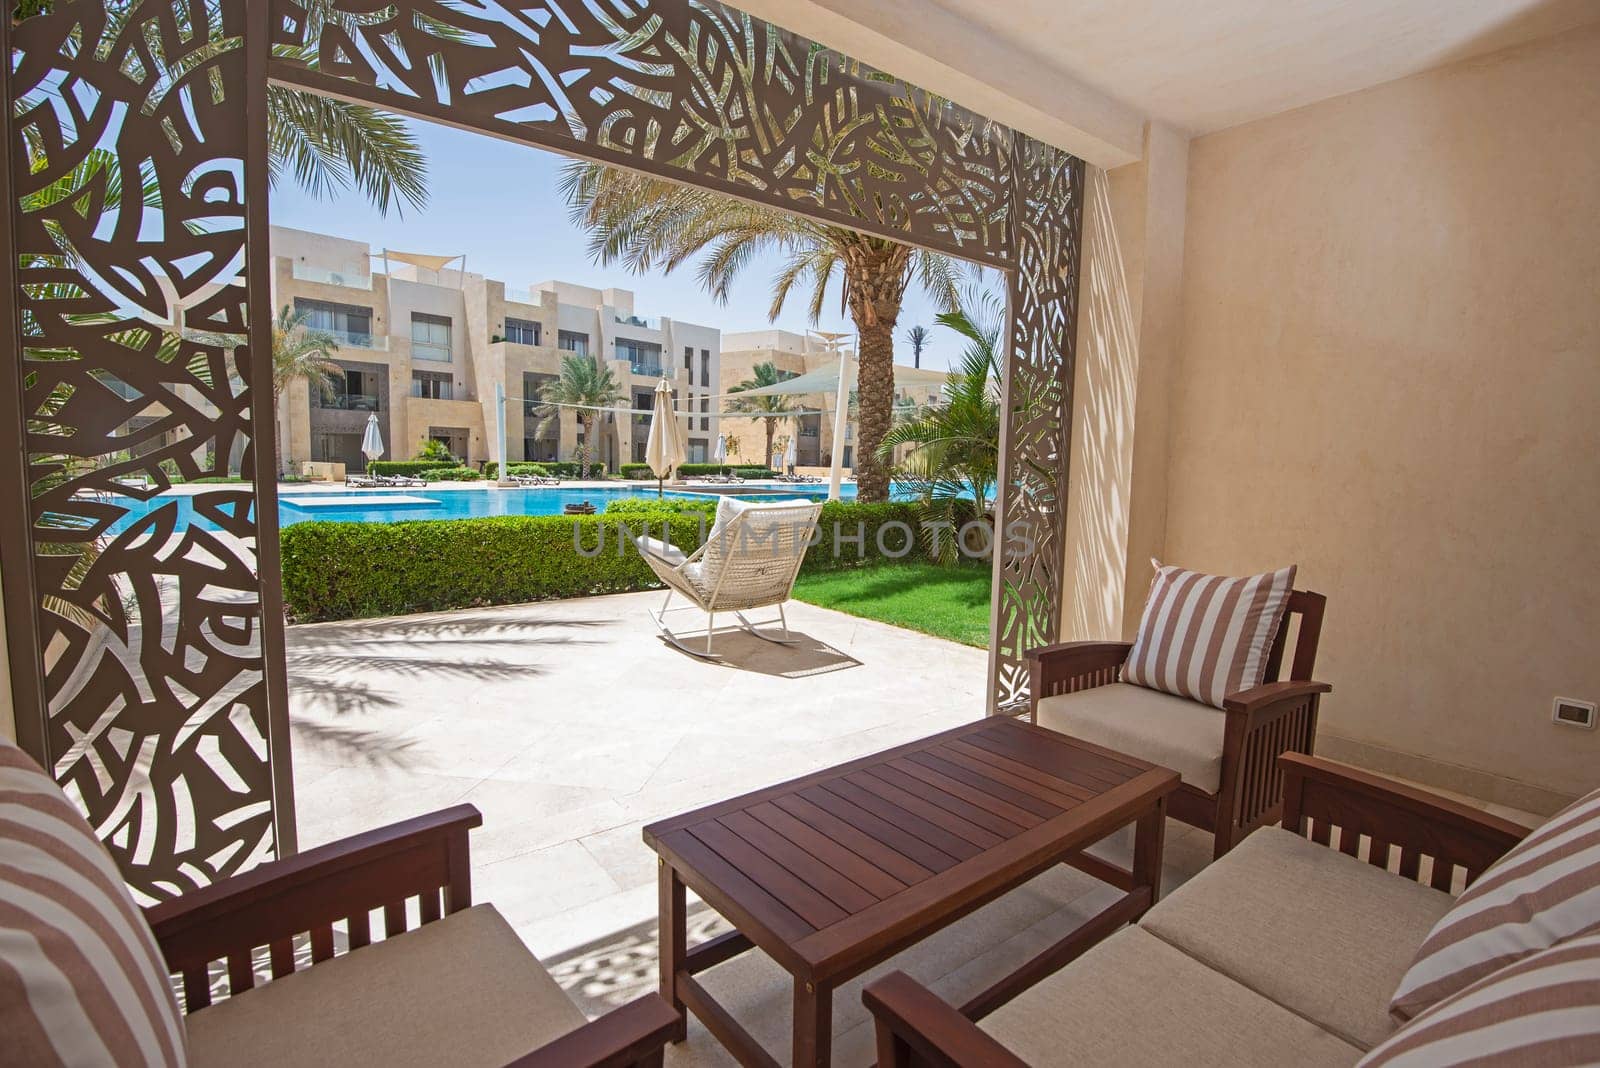 Patio terrace garden with chairs in tropical luxury apartment resort by paulvinten